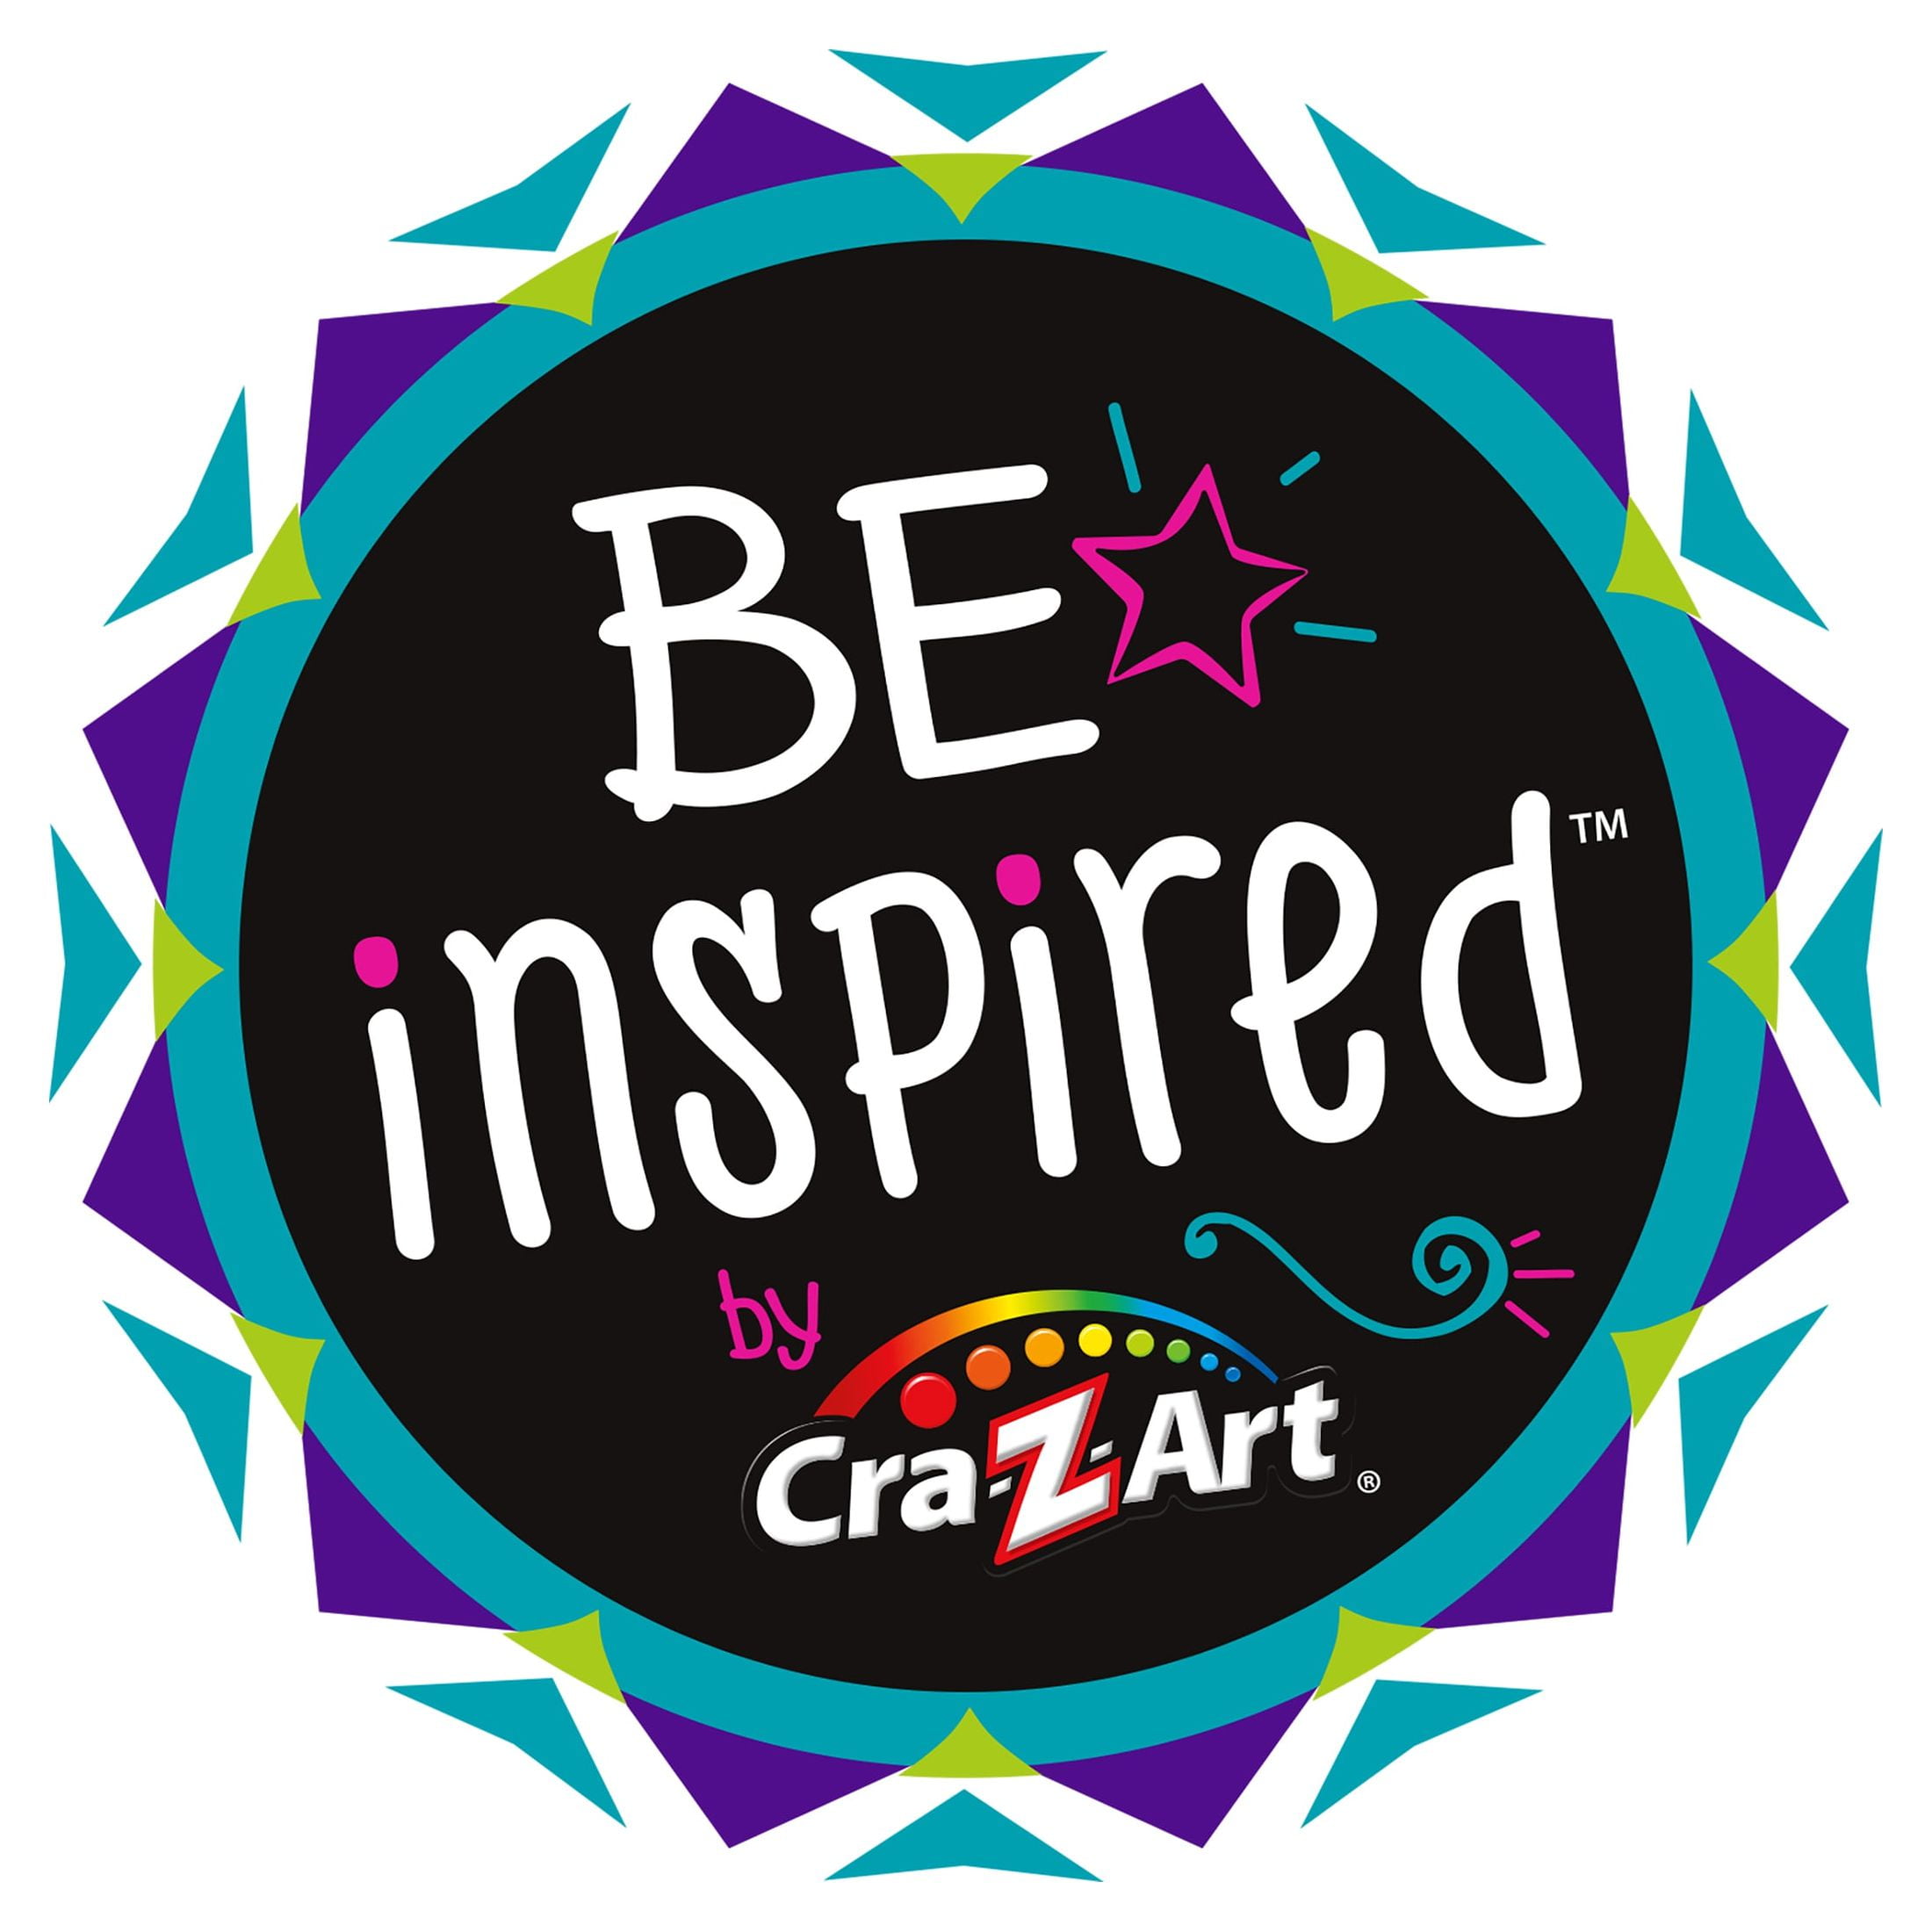 Cra-Z-Art Be Inspired Spa Creations Bath Bomb Maker, Multicolor Kit fo –  StockCalifornia